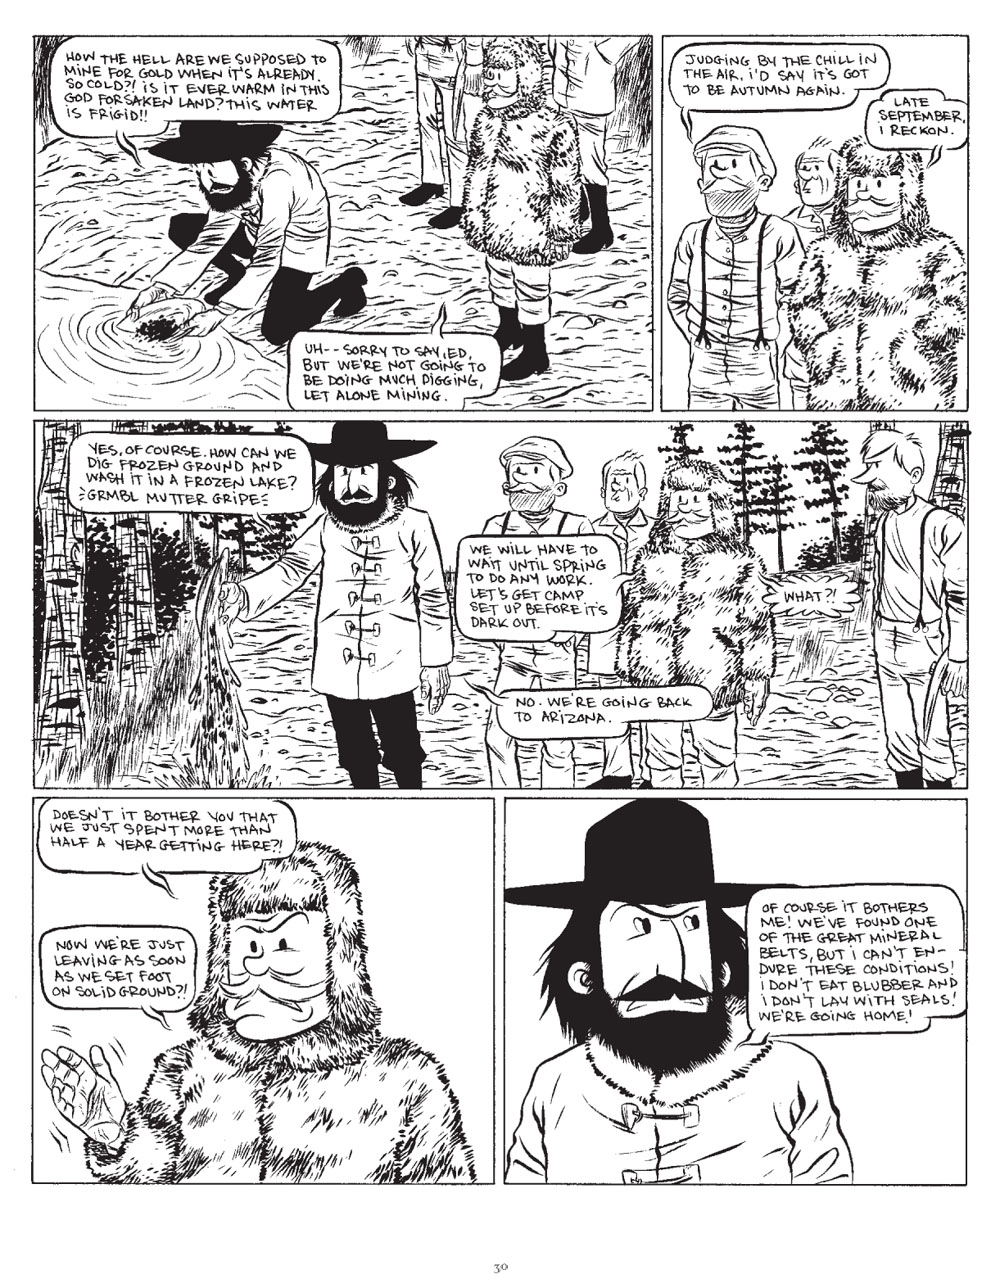 The Klondike Page 030